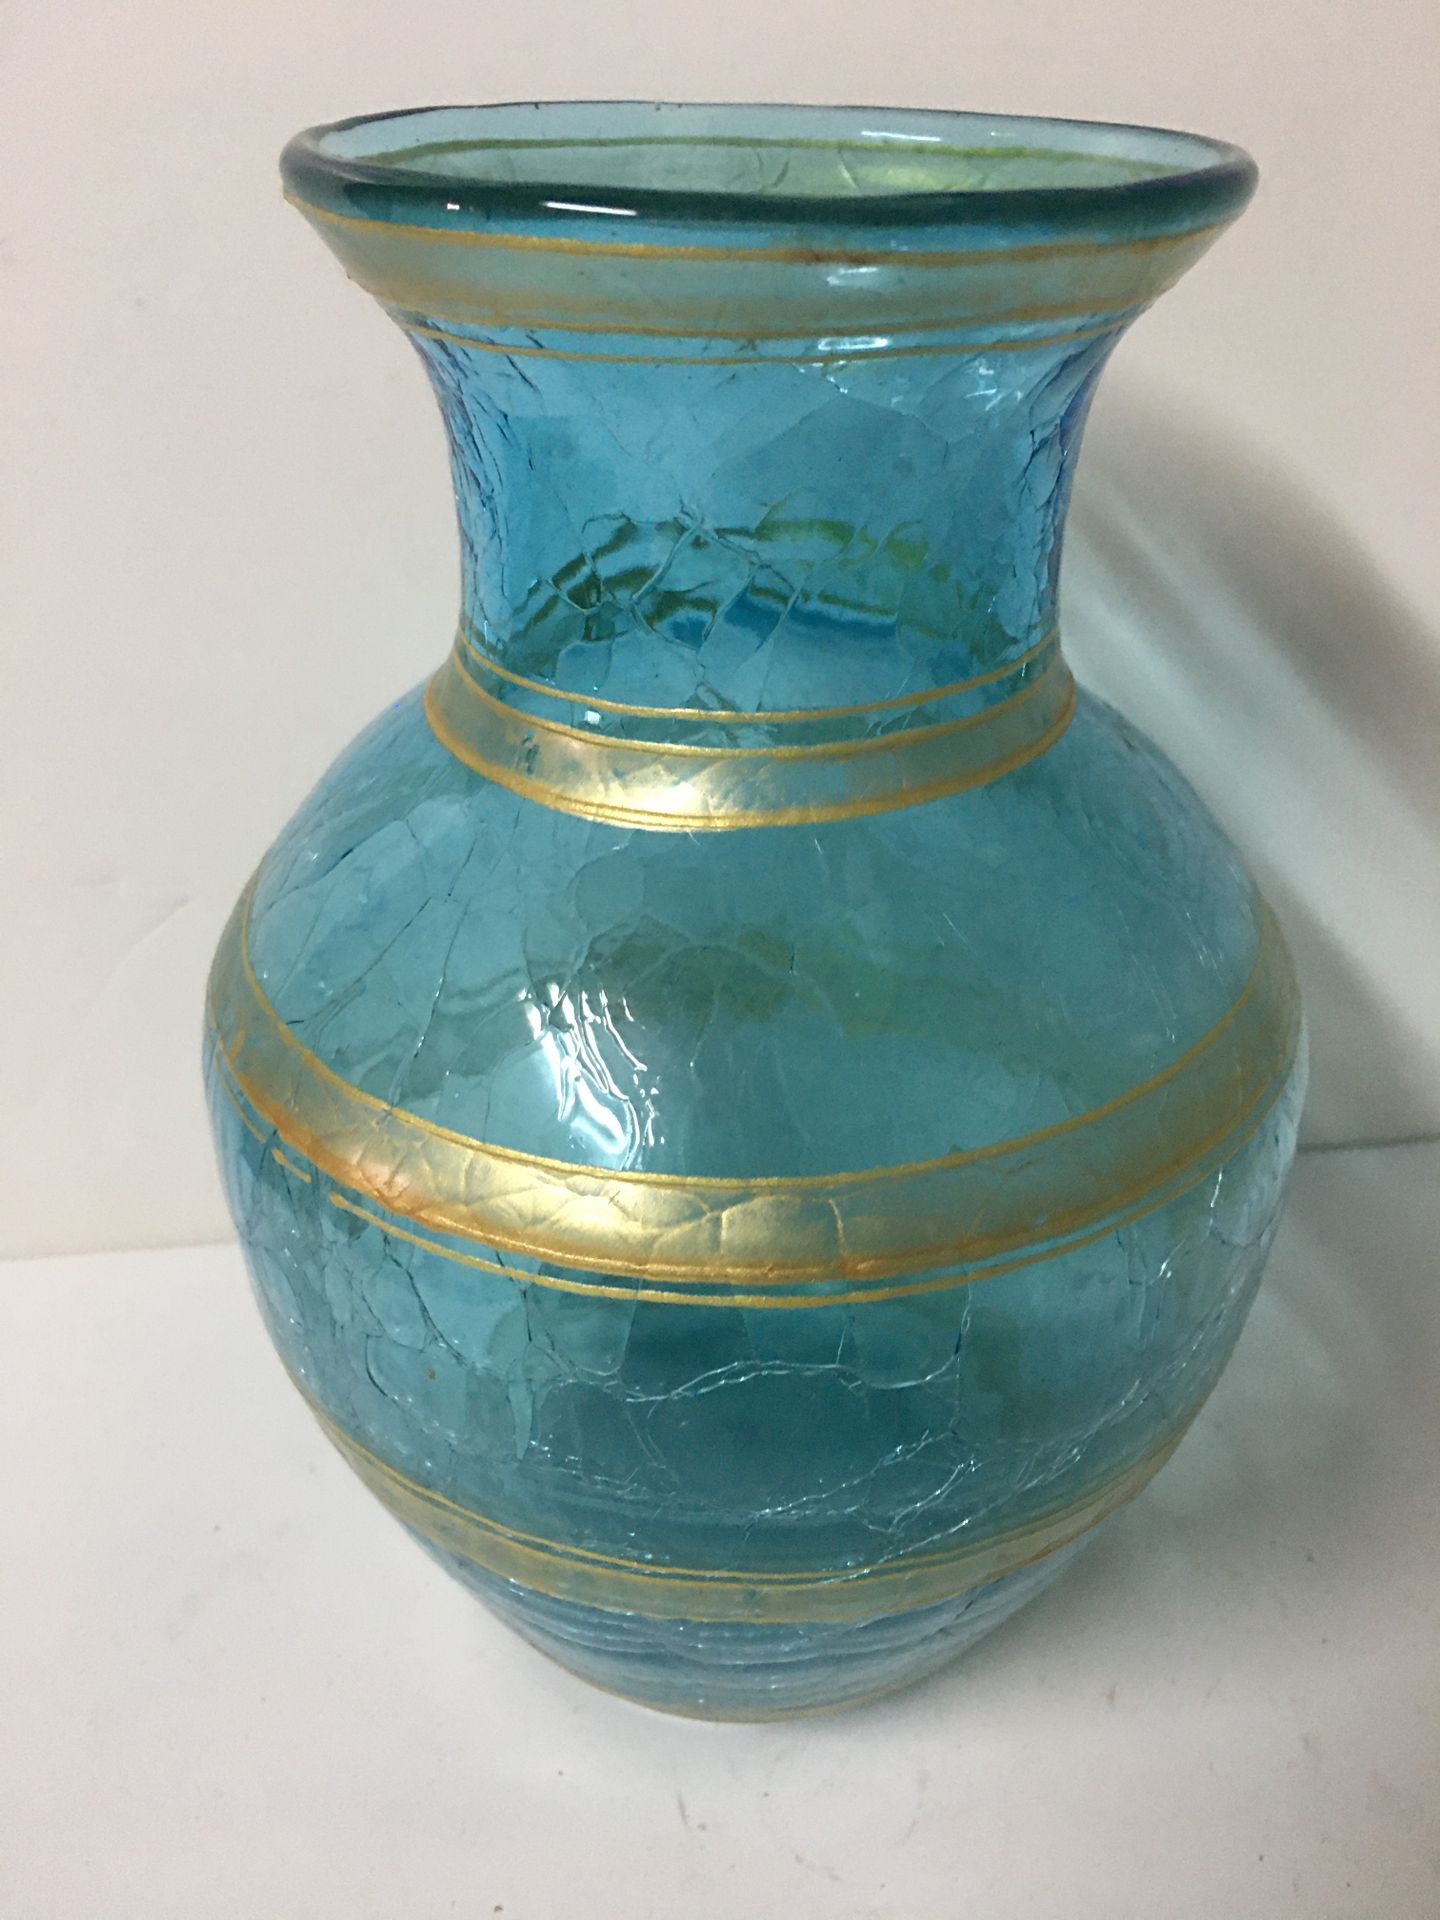 Null Vaso artigianale in vetro blu con cerchi dorati D 13 cm H 19 cm